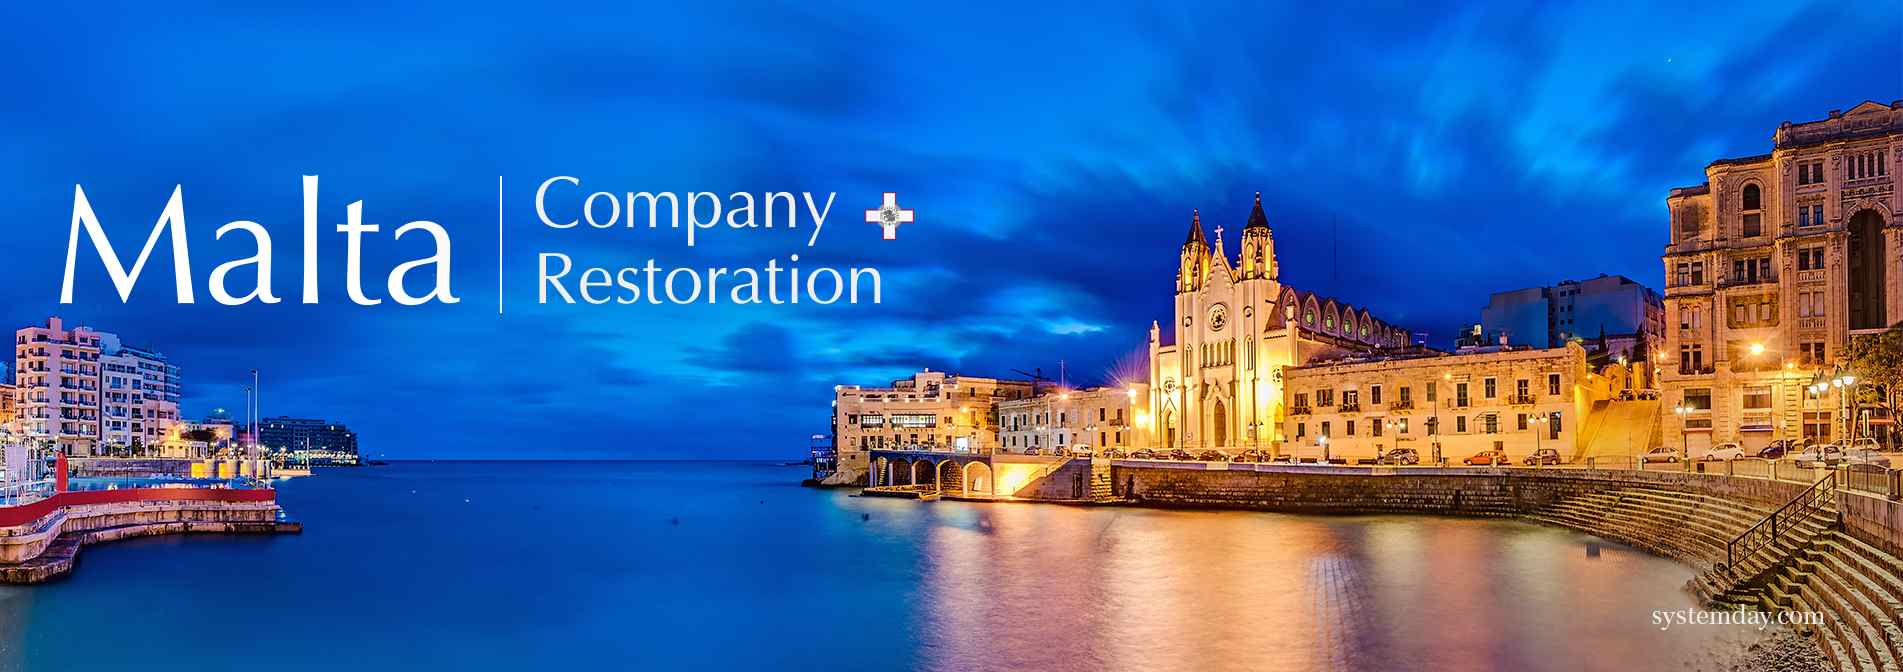 Malta Company Restoration